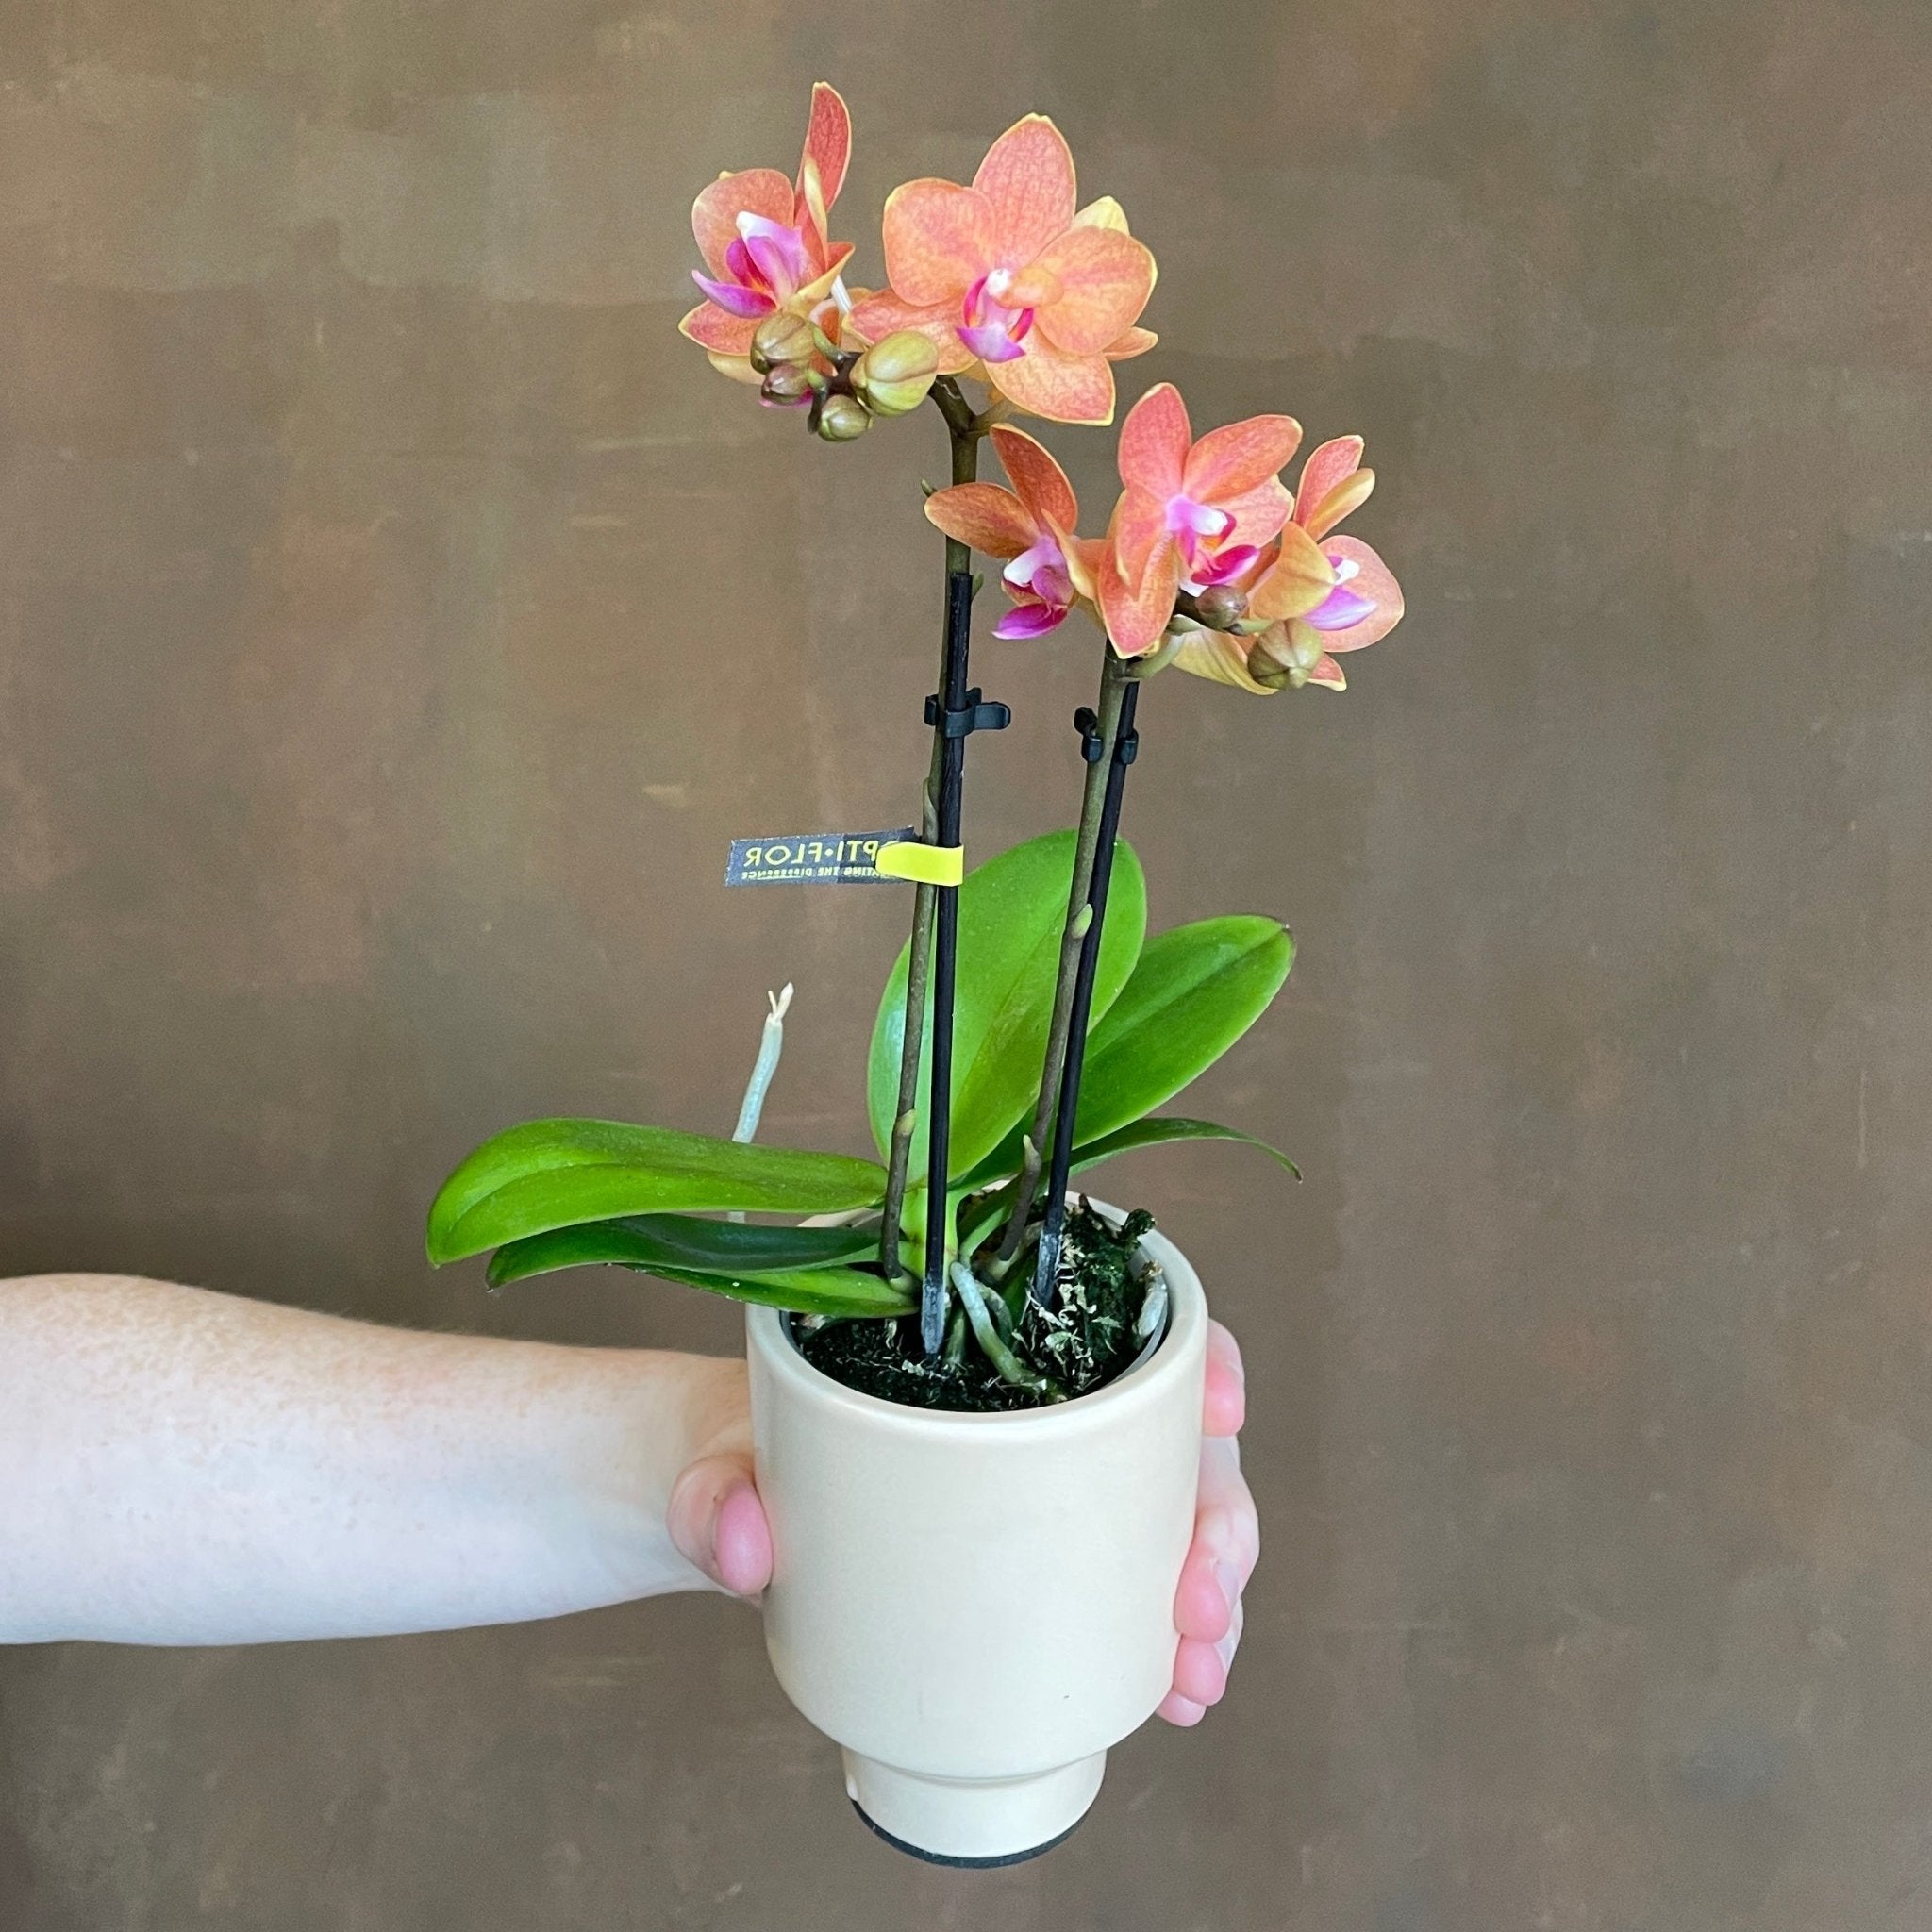 Phalaenopsis ‘Optifriend' with Pot - grow urban. UK